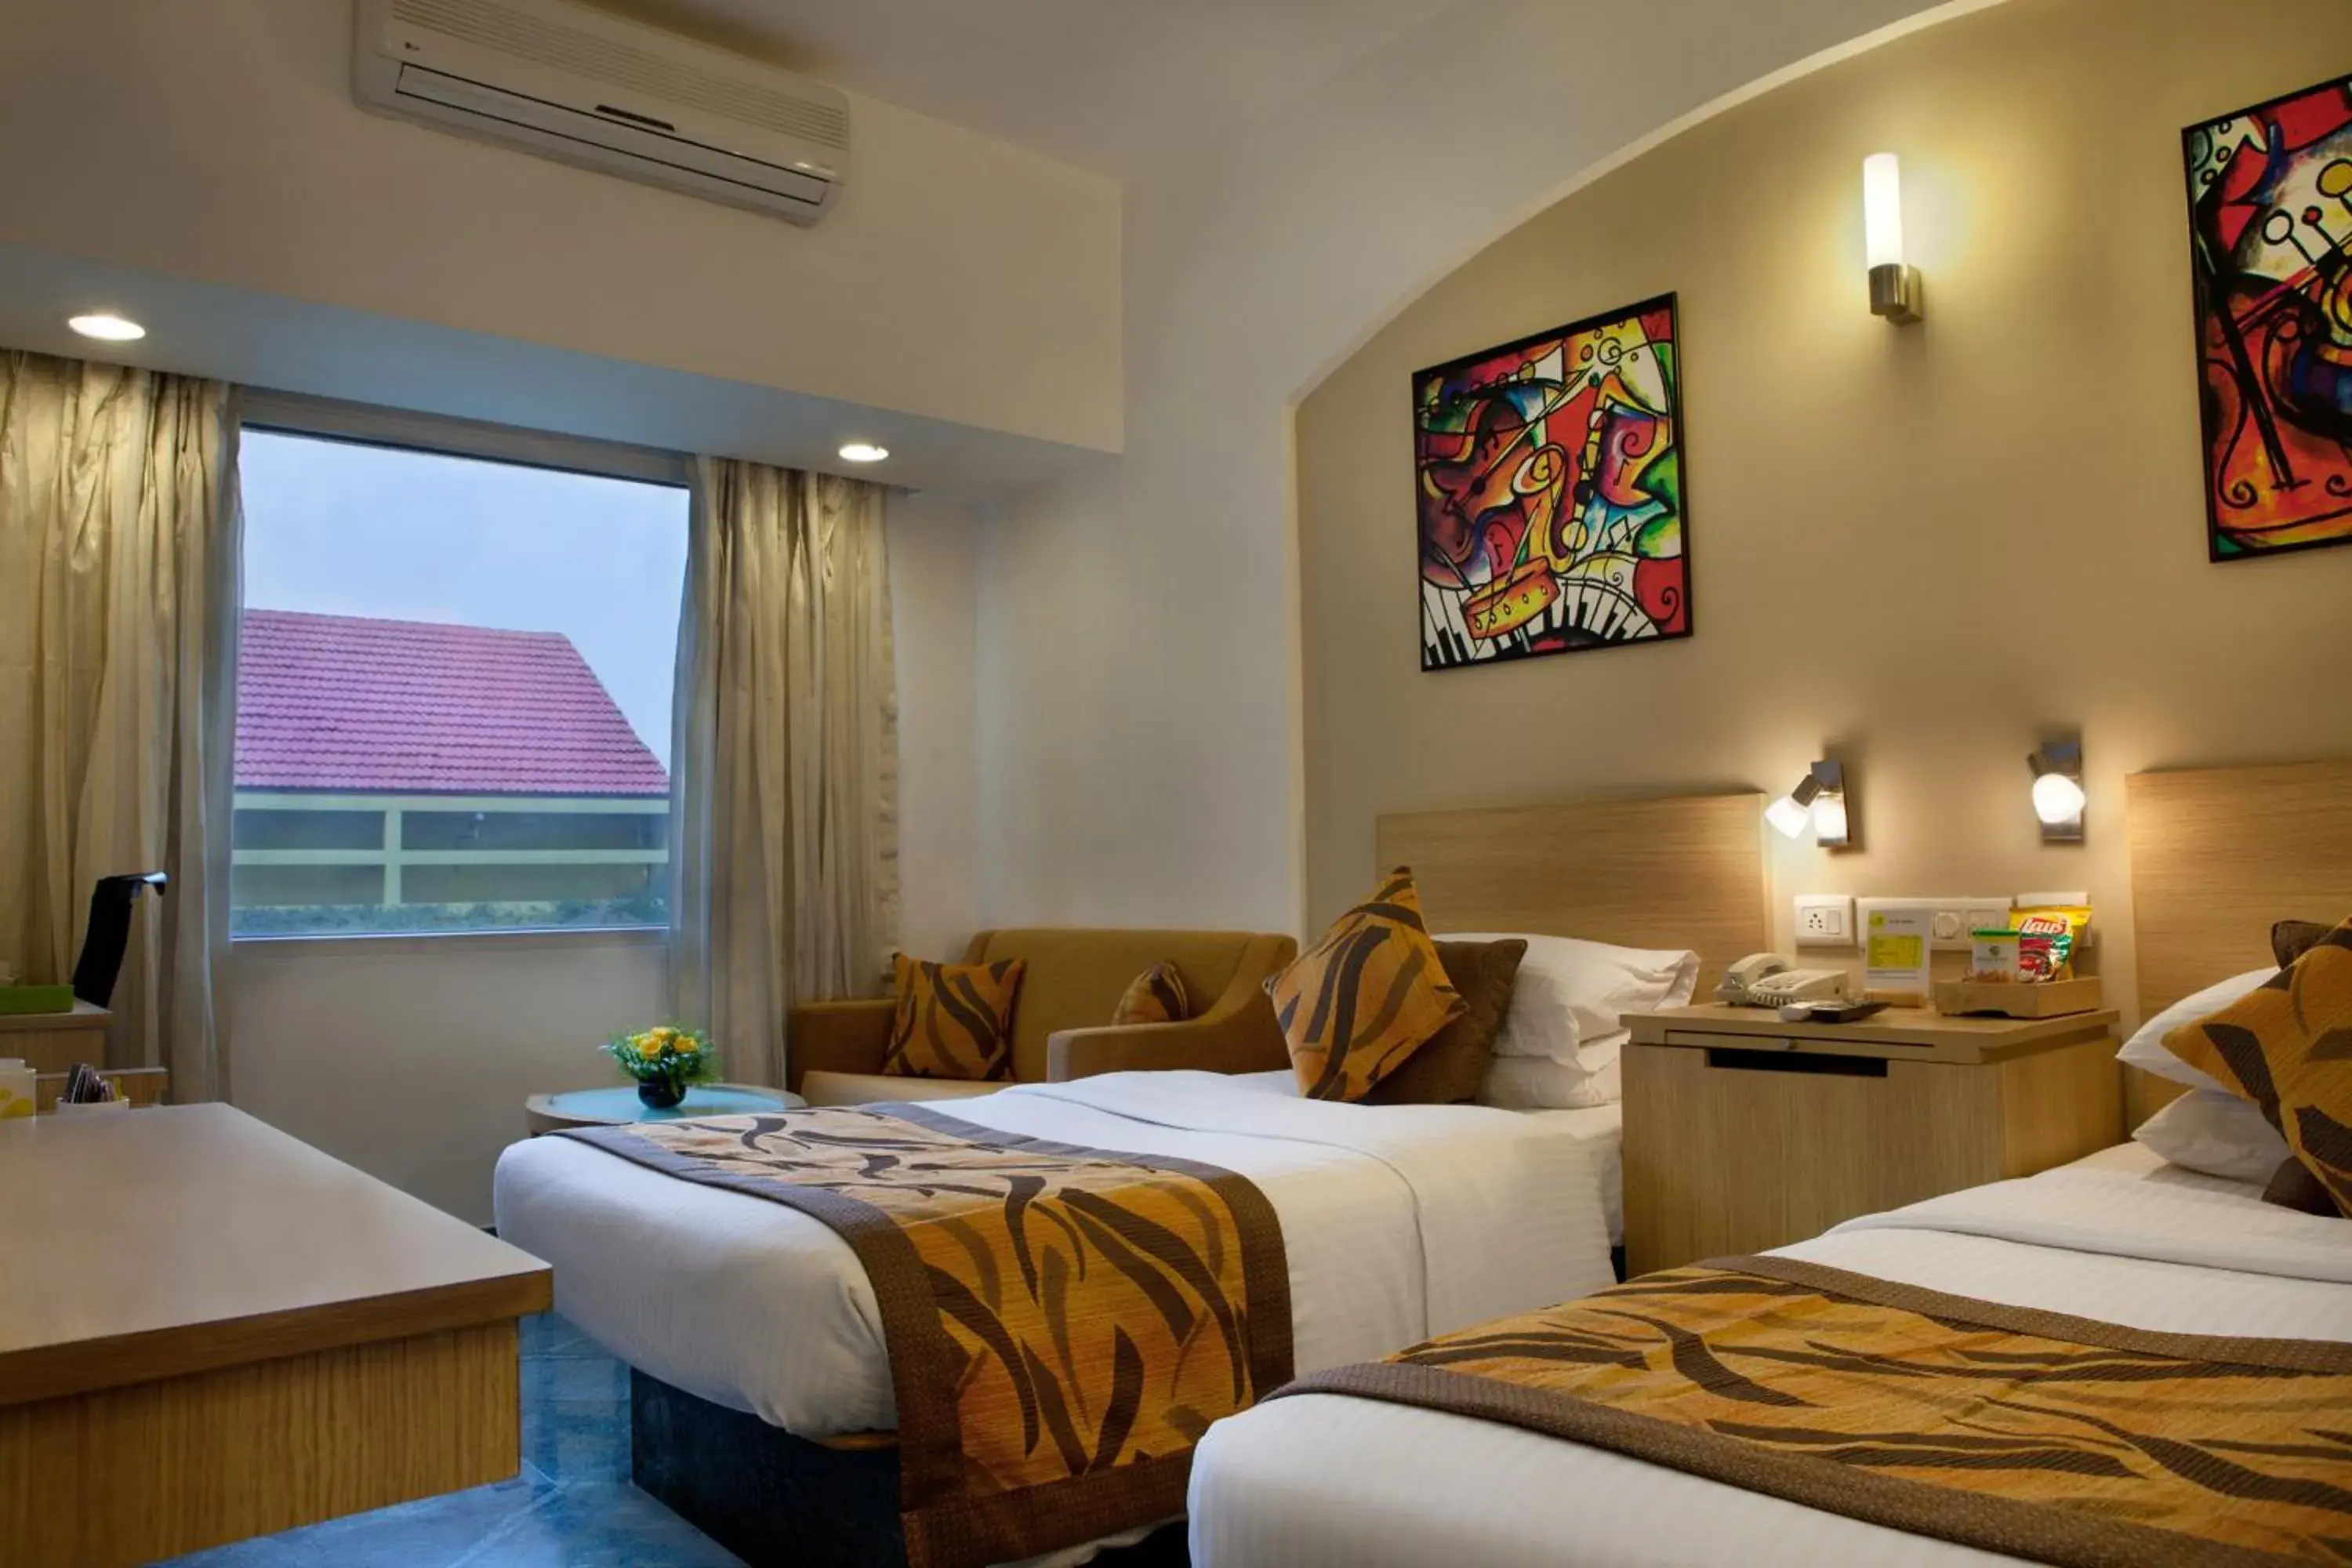 Decorative detail, Bed in Lemon Tree Hotel, Udyog Vihar, Gurugram